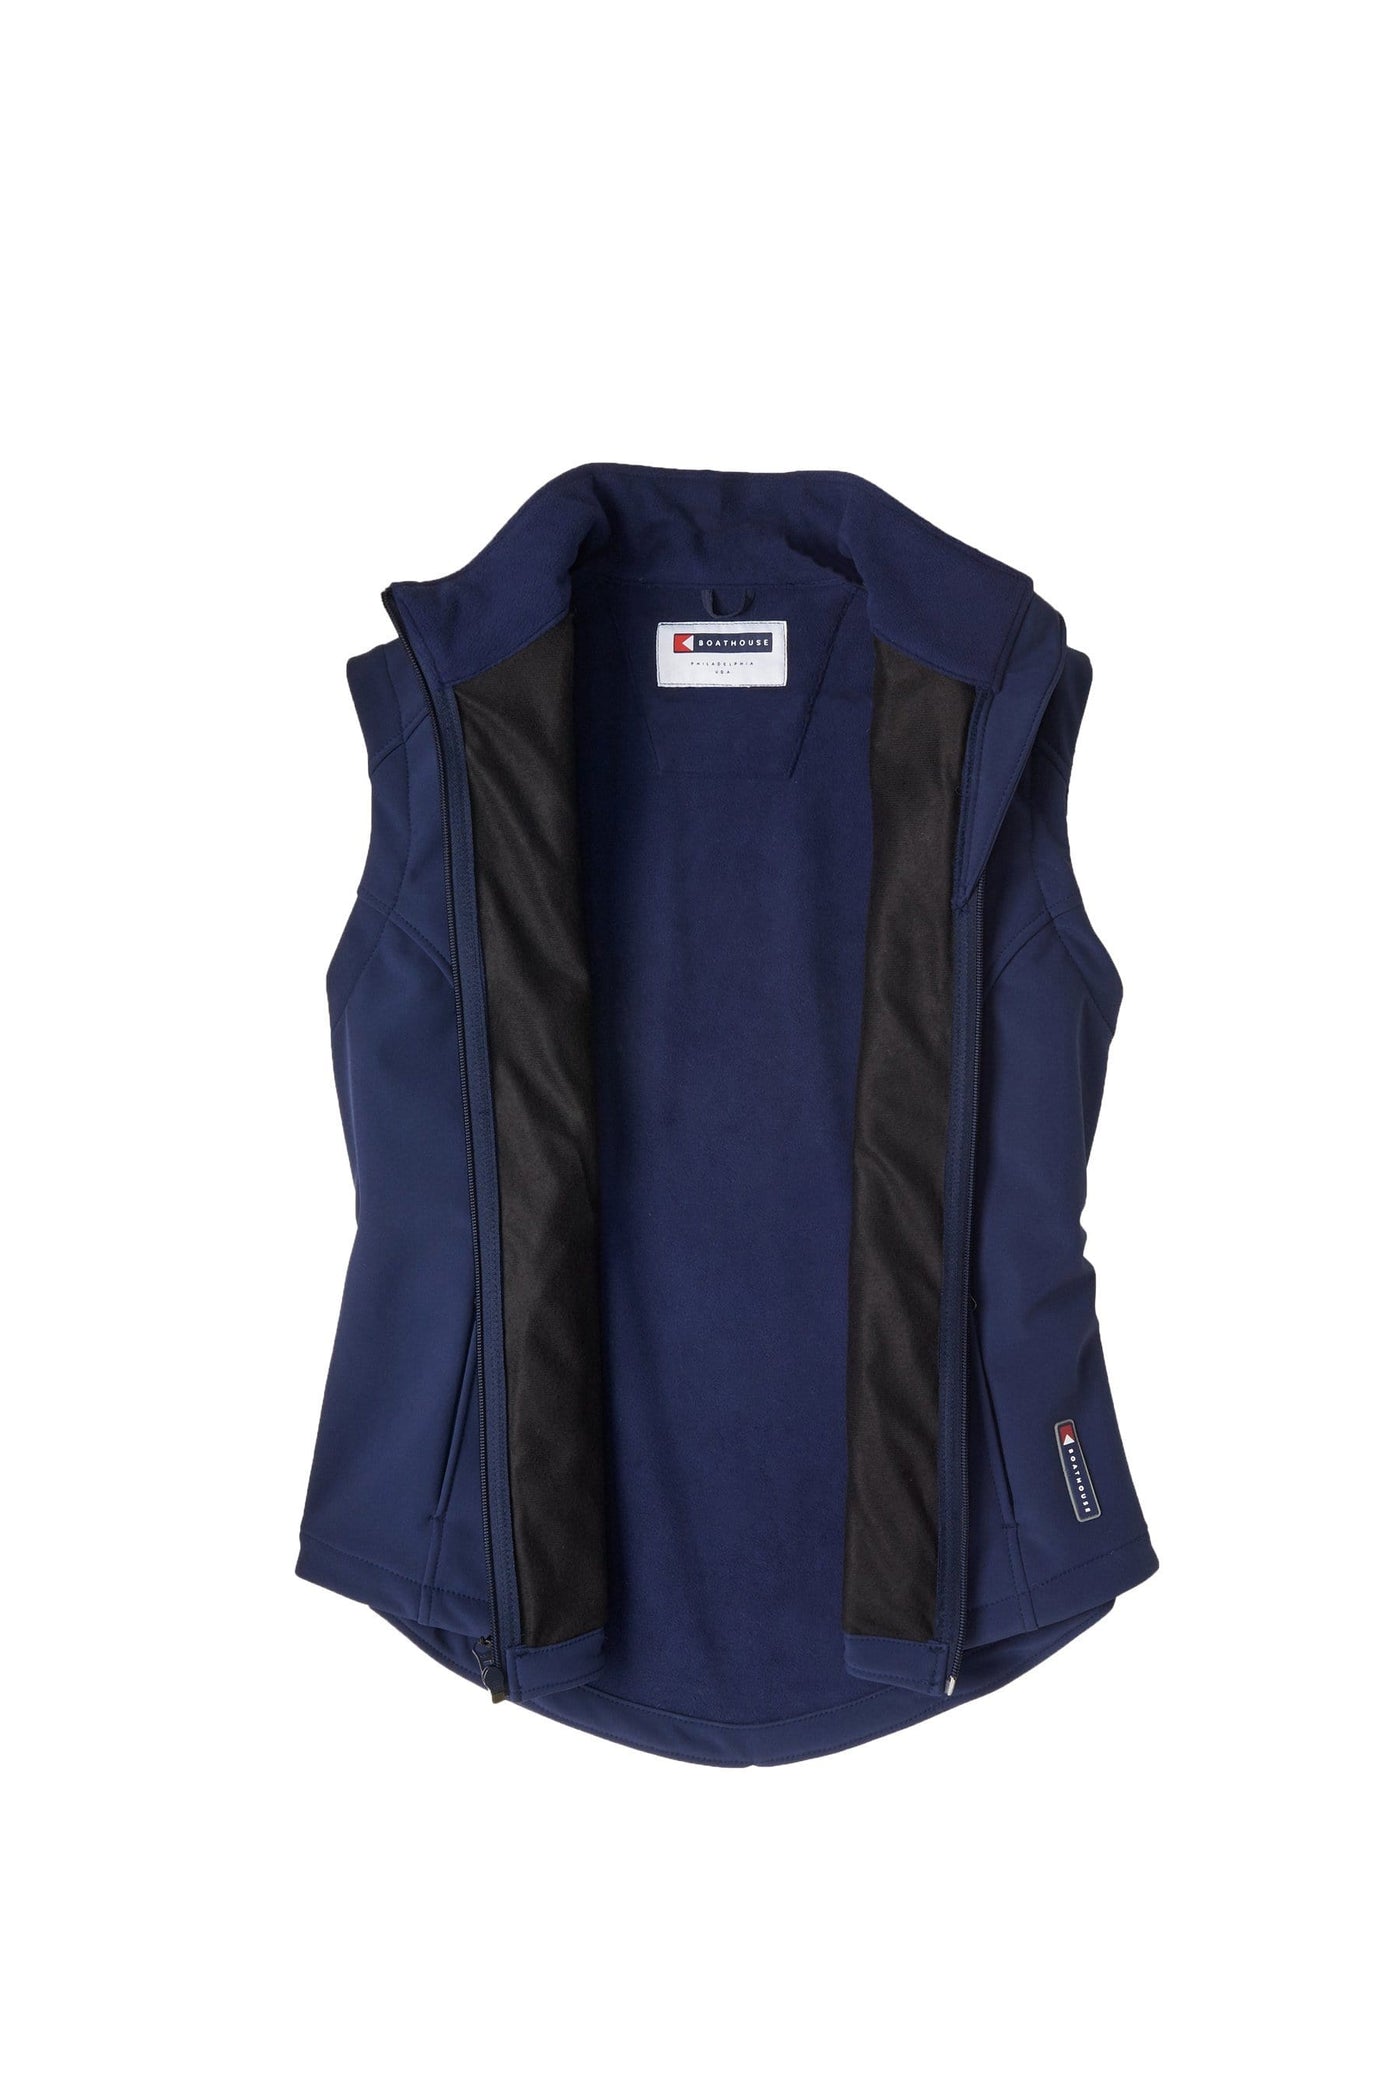 Women's Equinox Soft Shell Vest